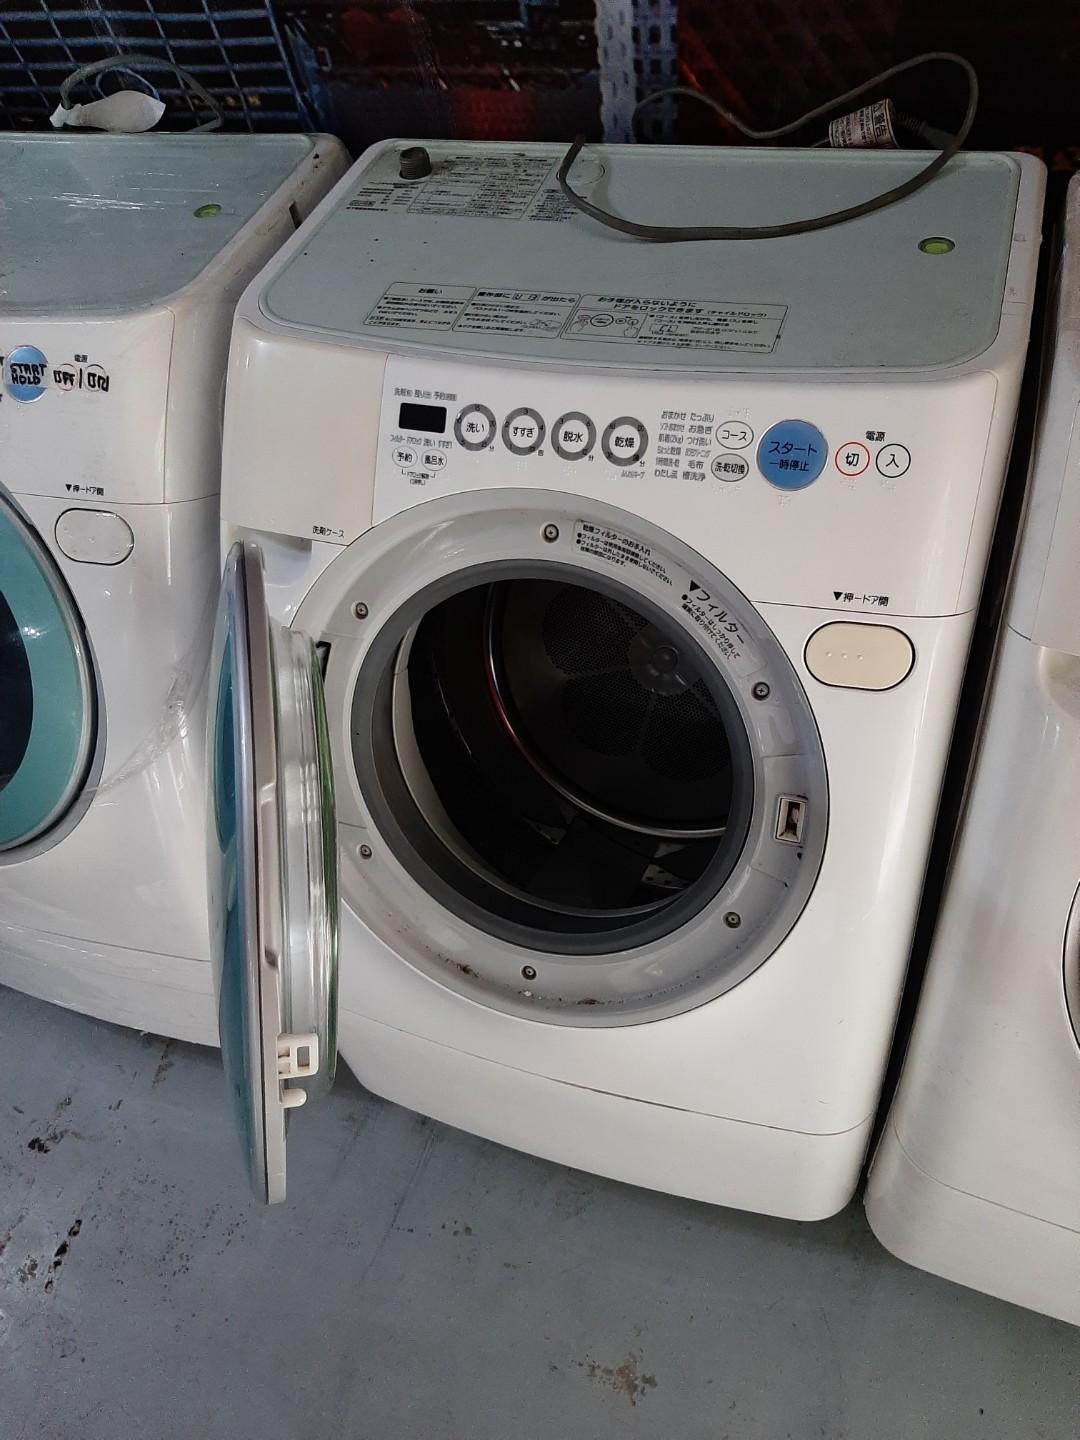 Automatic Washing Machine With 100heatdryer Full Dry Japan Surplus 8kg Capacity 2ndhand 1581047121 A2d49300 Progressive 